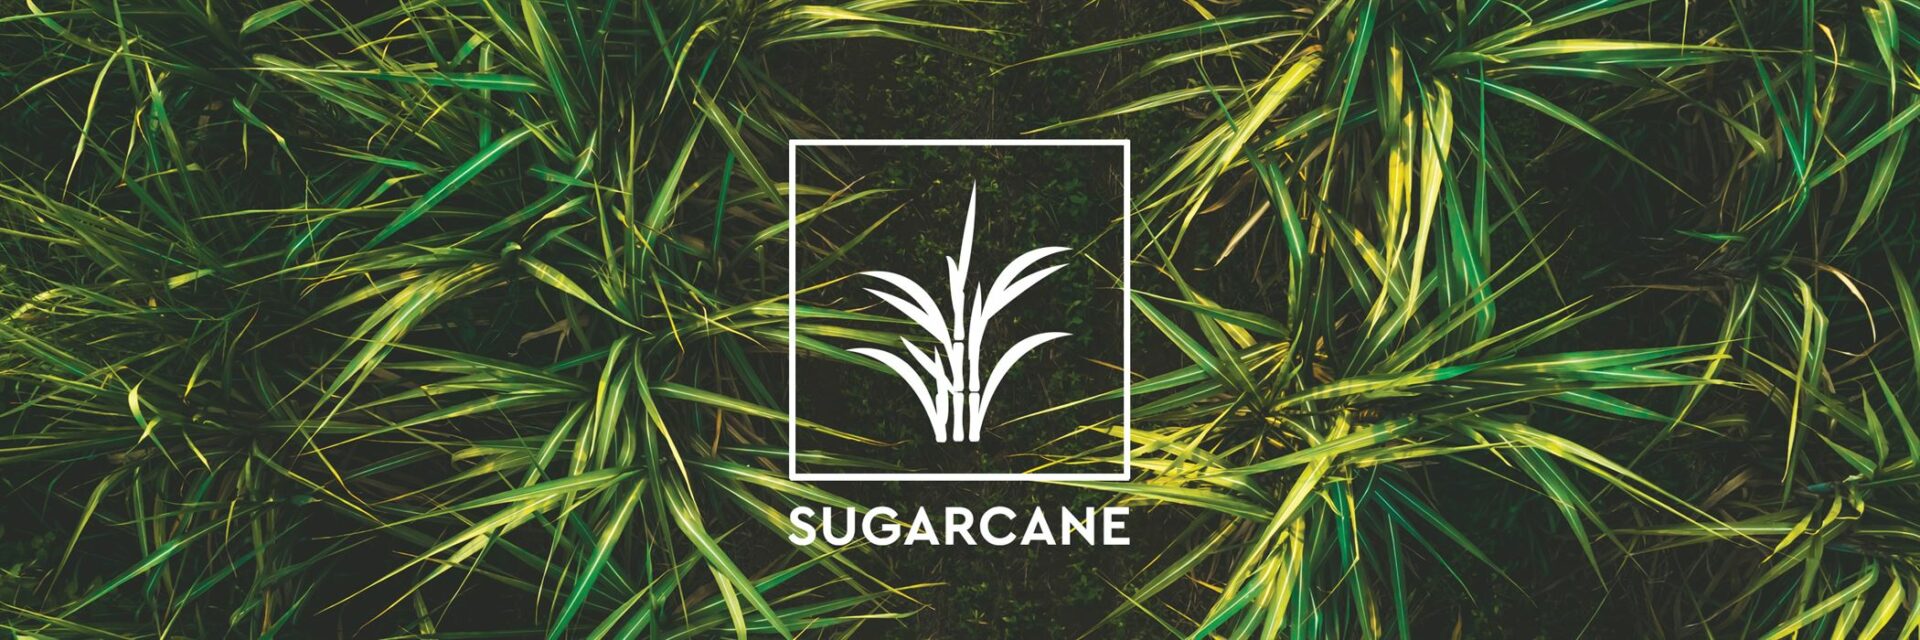 Sugarcane | OL-A Products